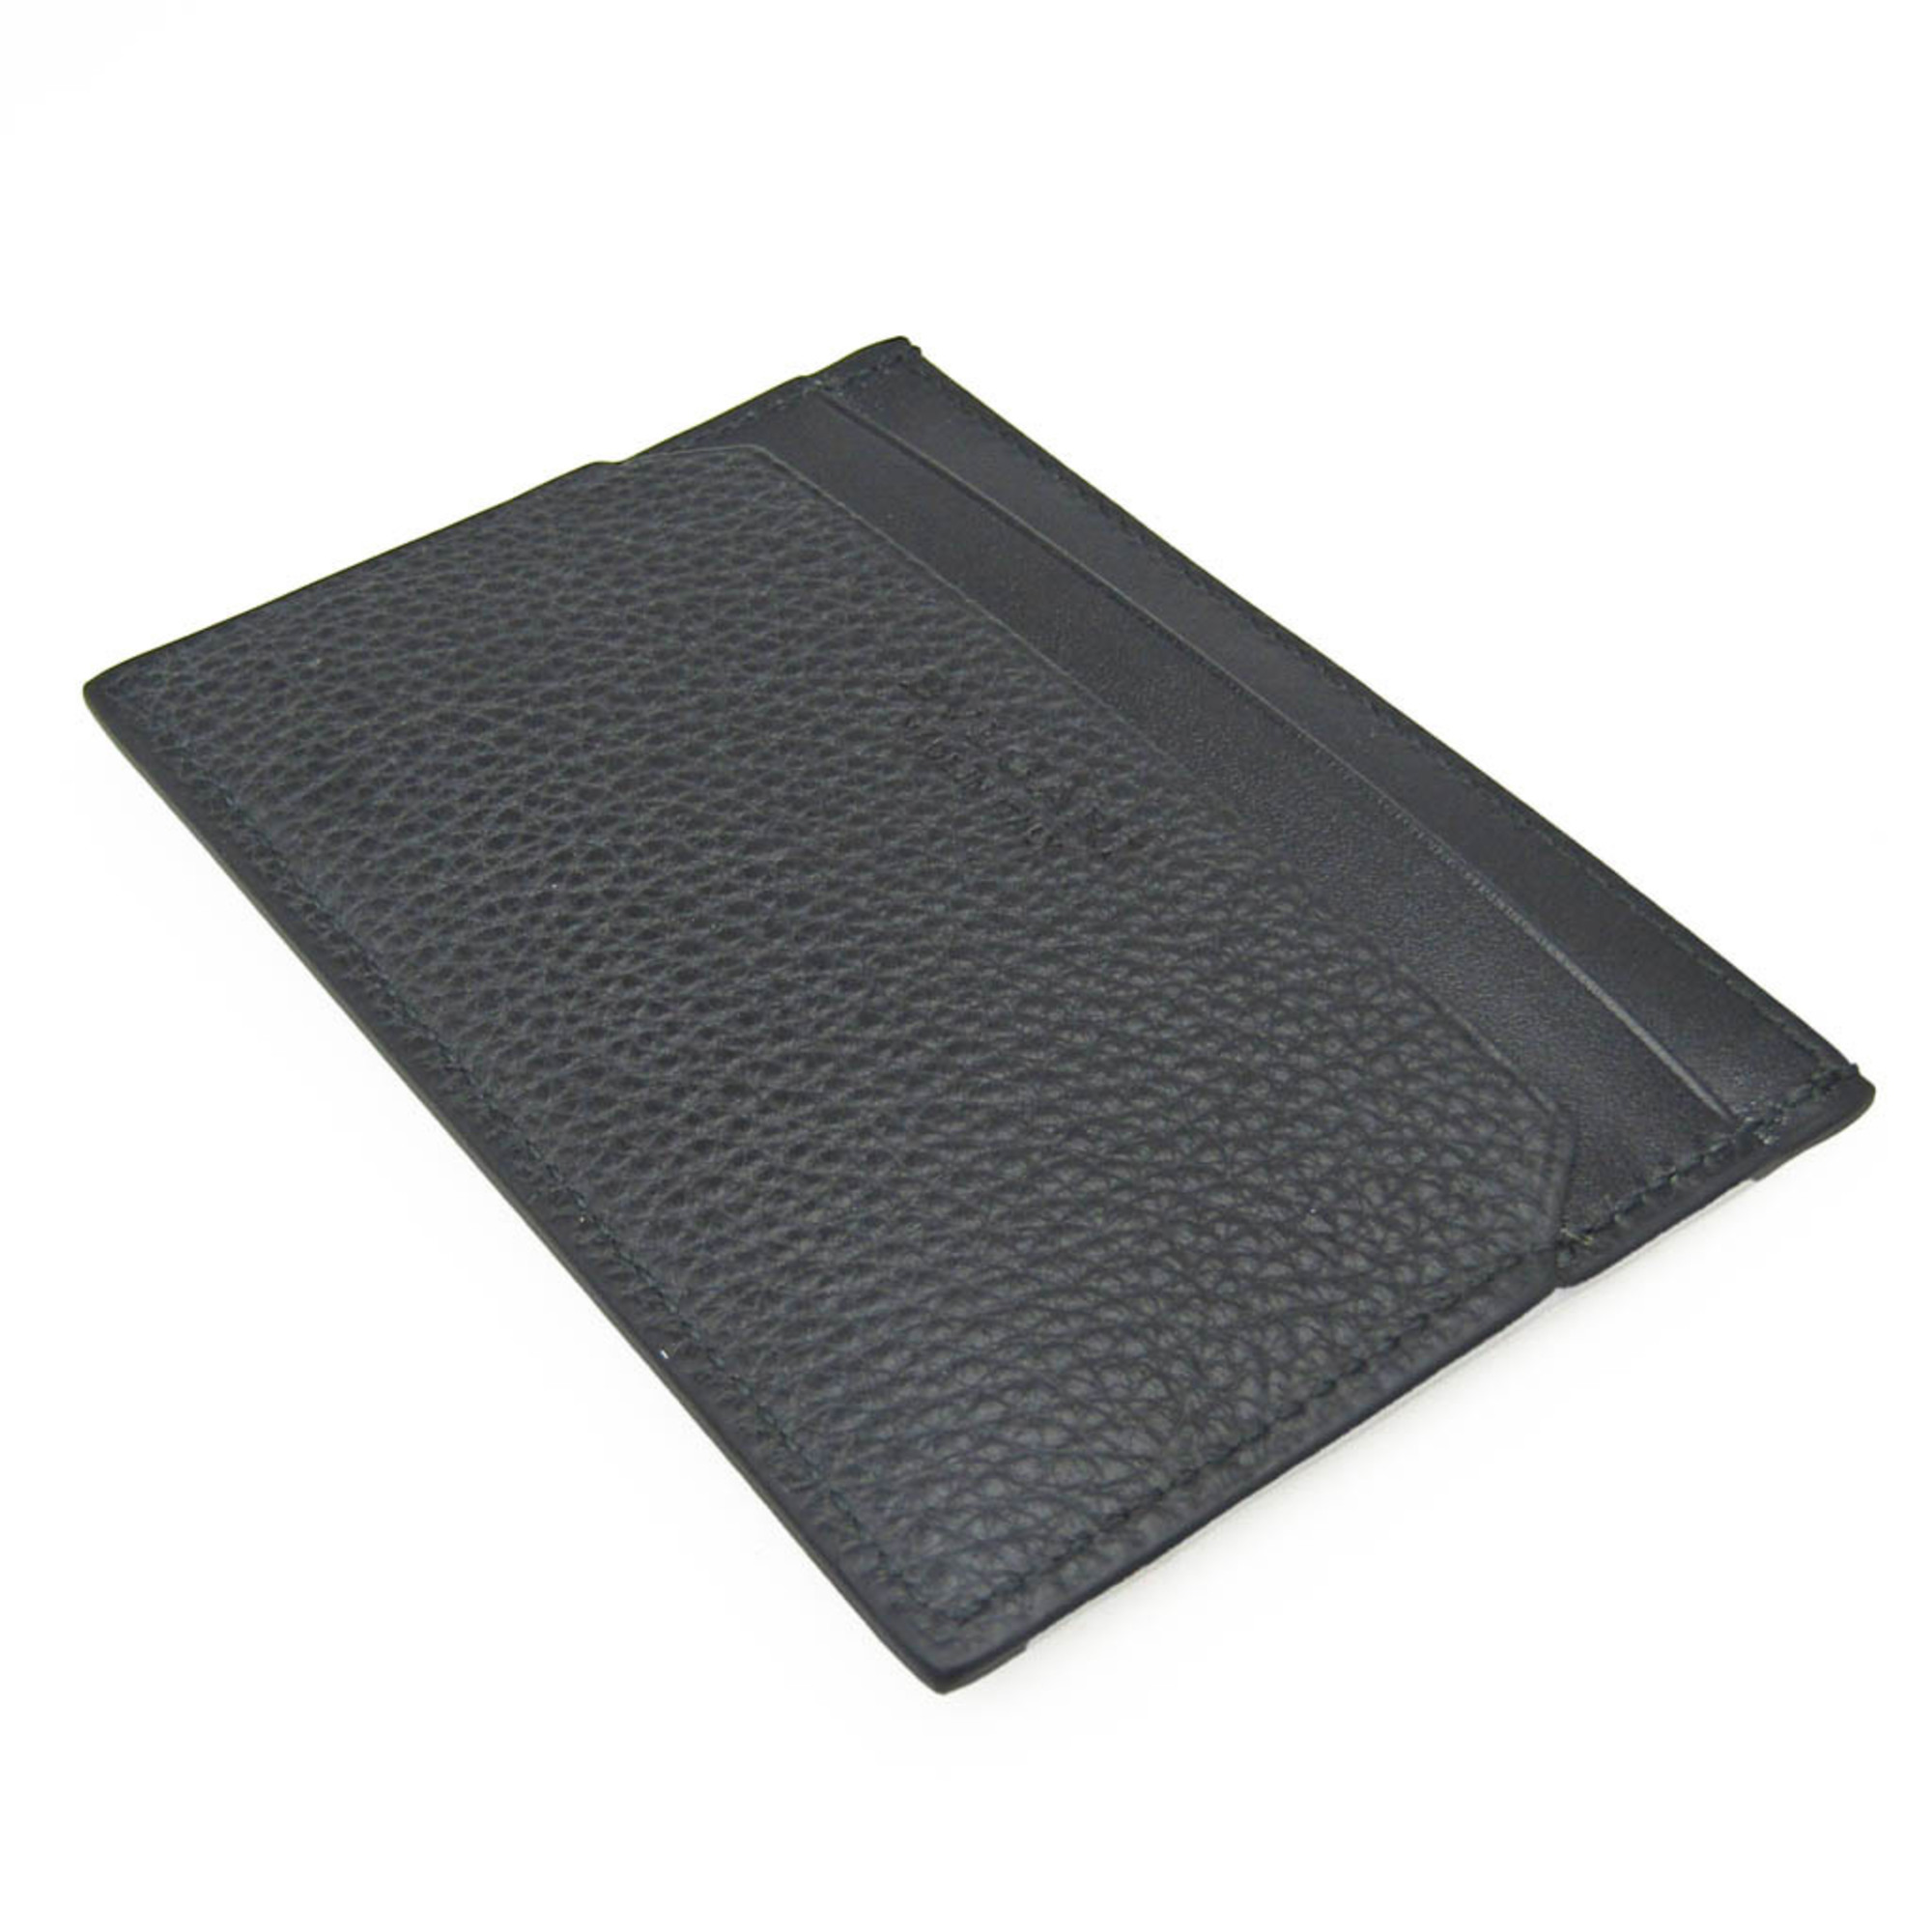 Bvlgari 36969 Leather Card Case Black